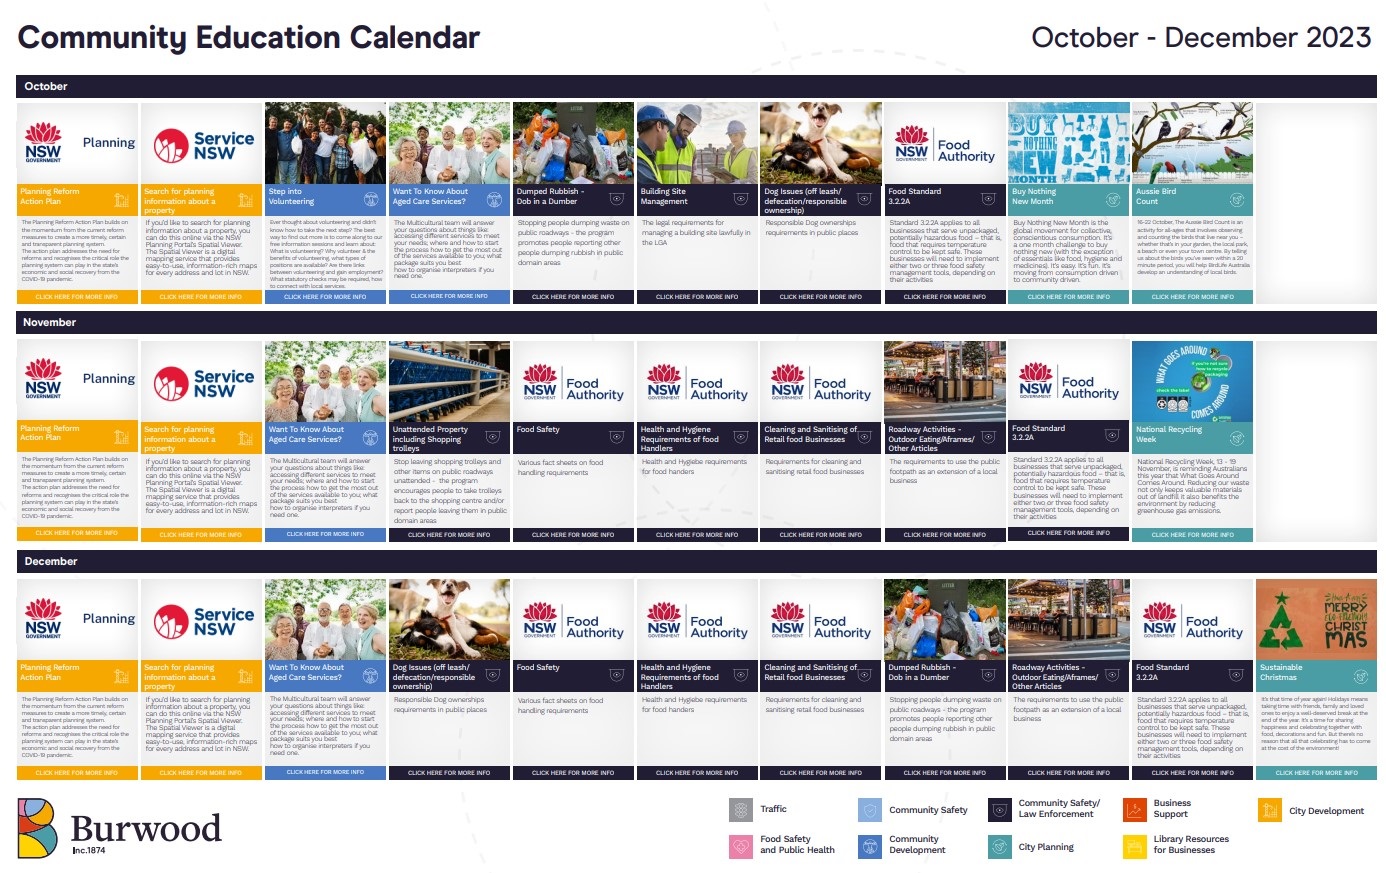 Community Education Calendar Oct, Nov, Dec 2023